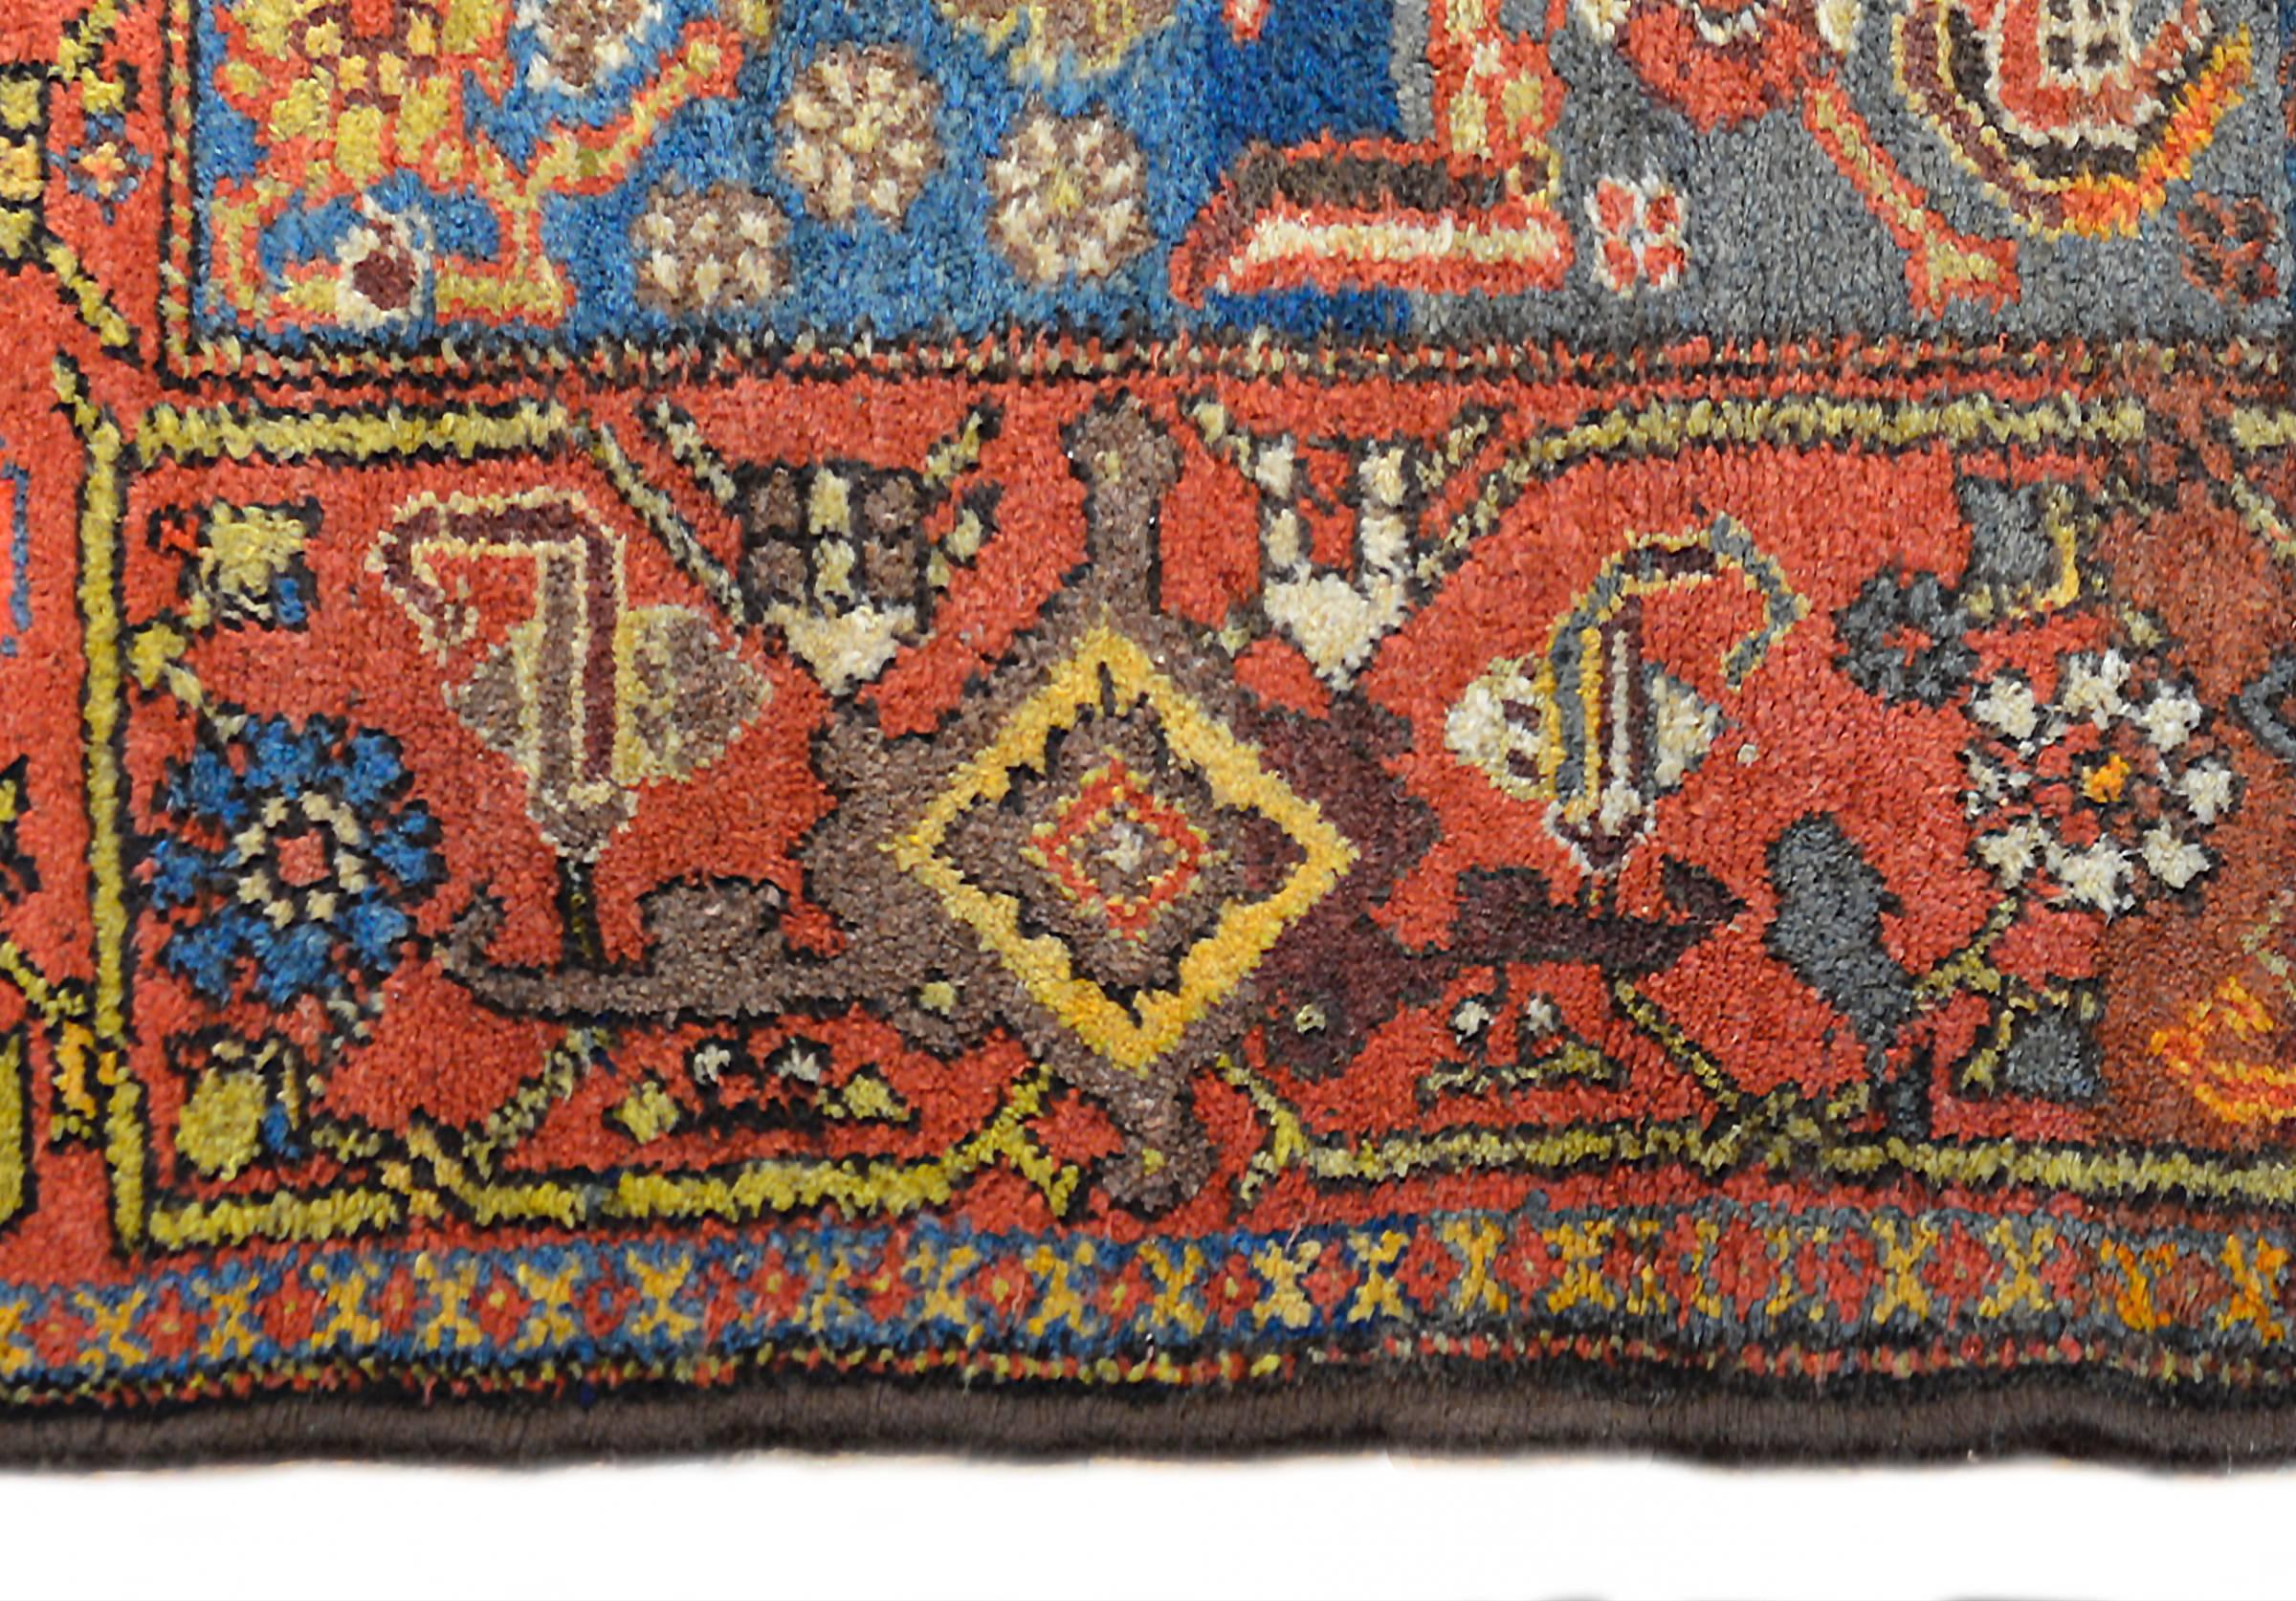 Kazak Stunning Early 20th Century Kurdish Rug